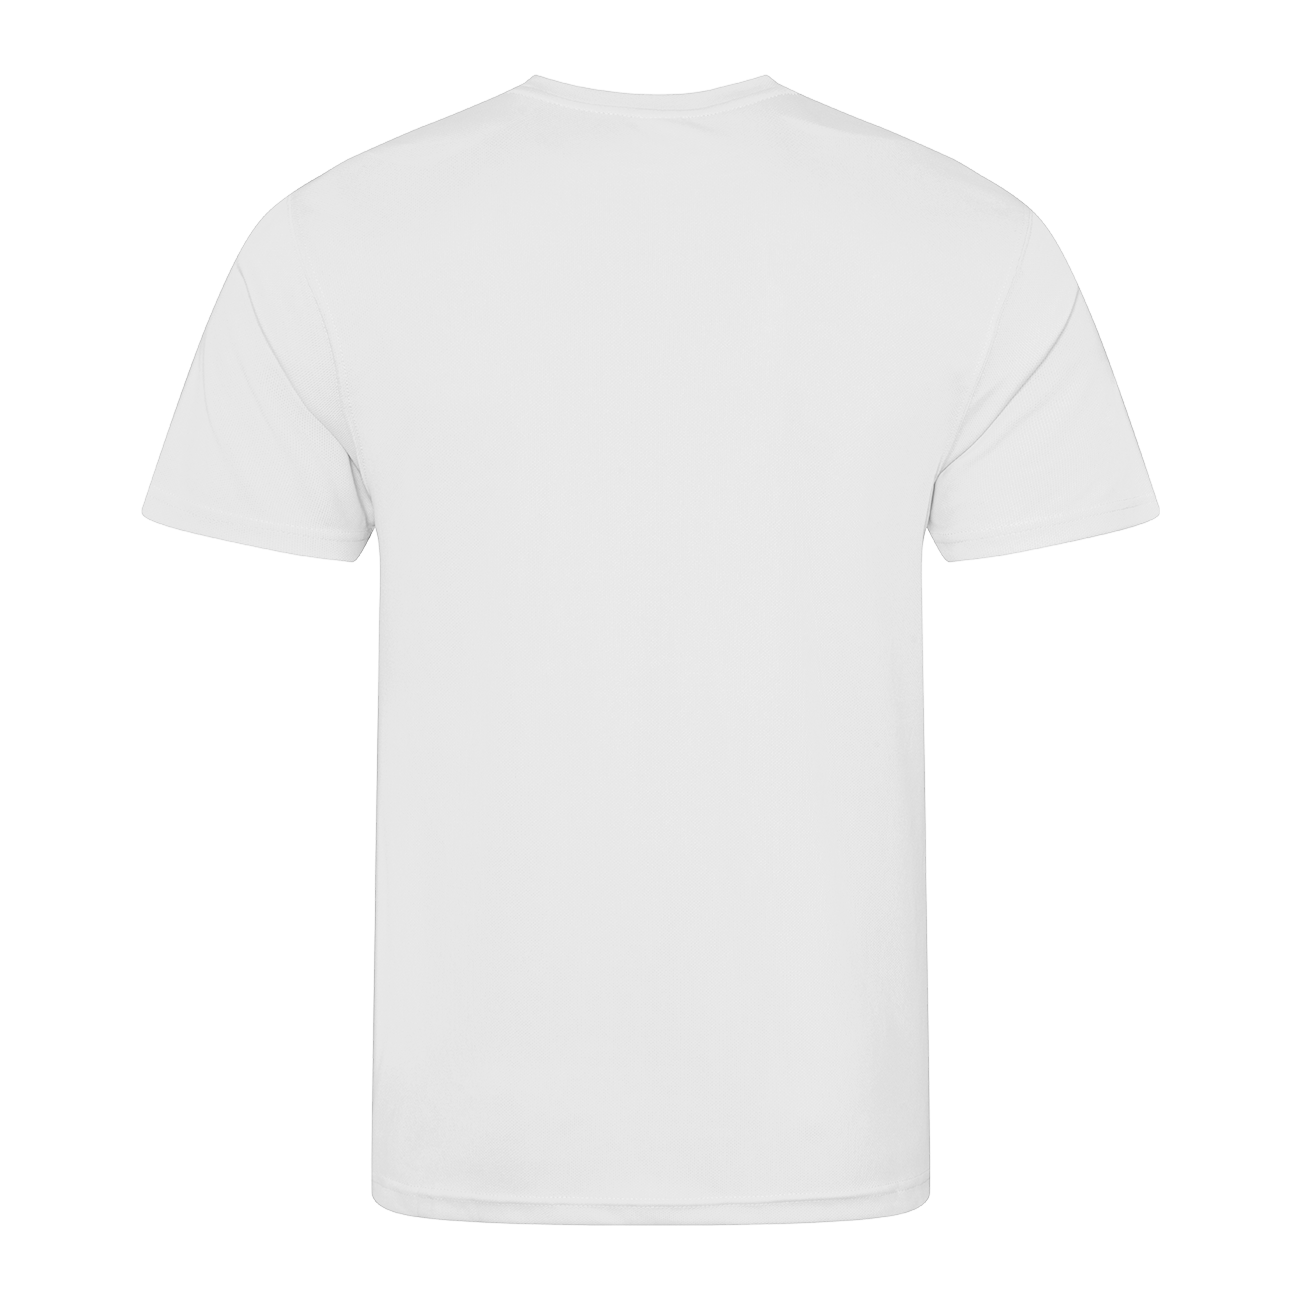 Men's Cool T-shirt UK